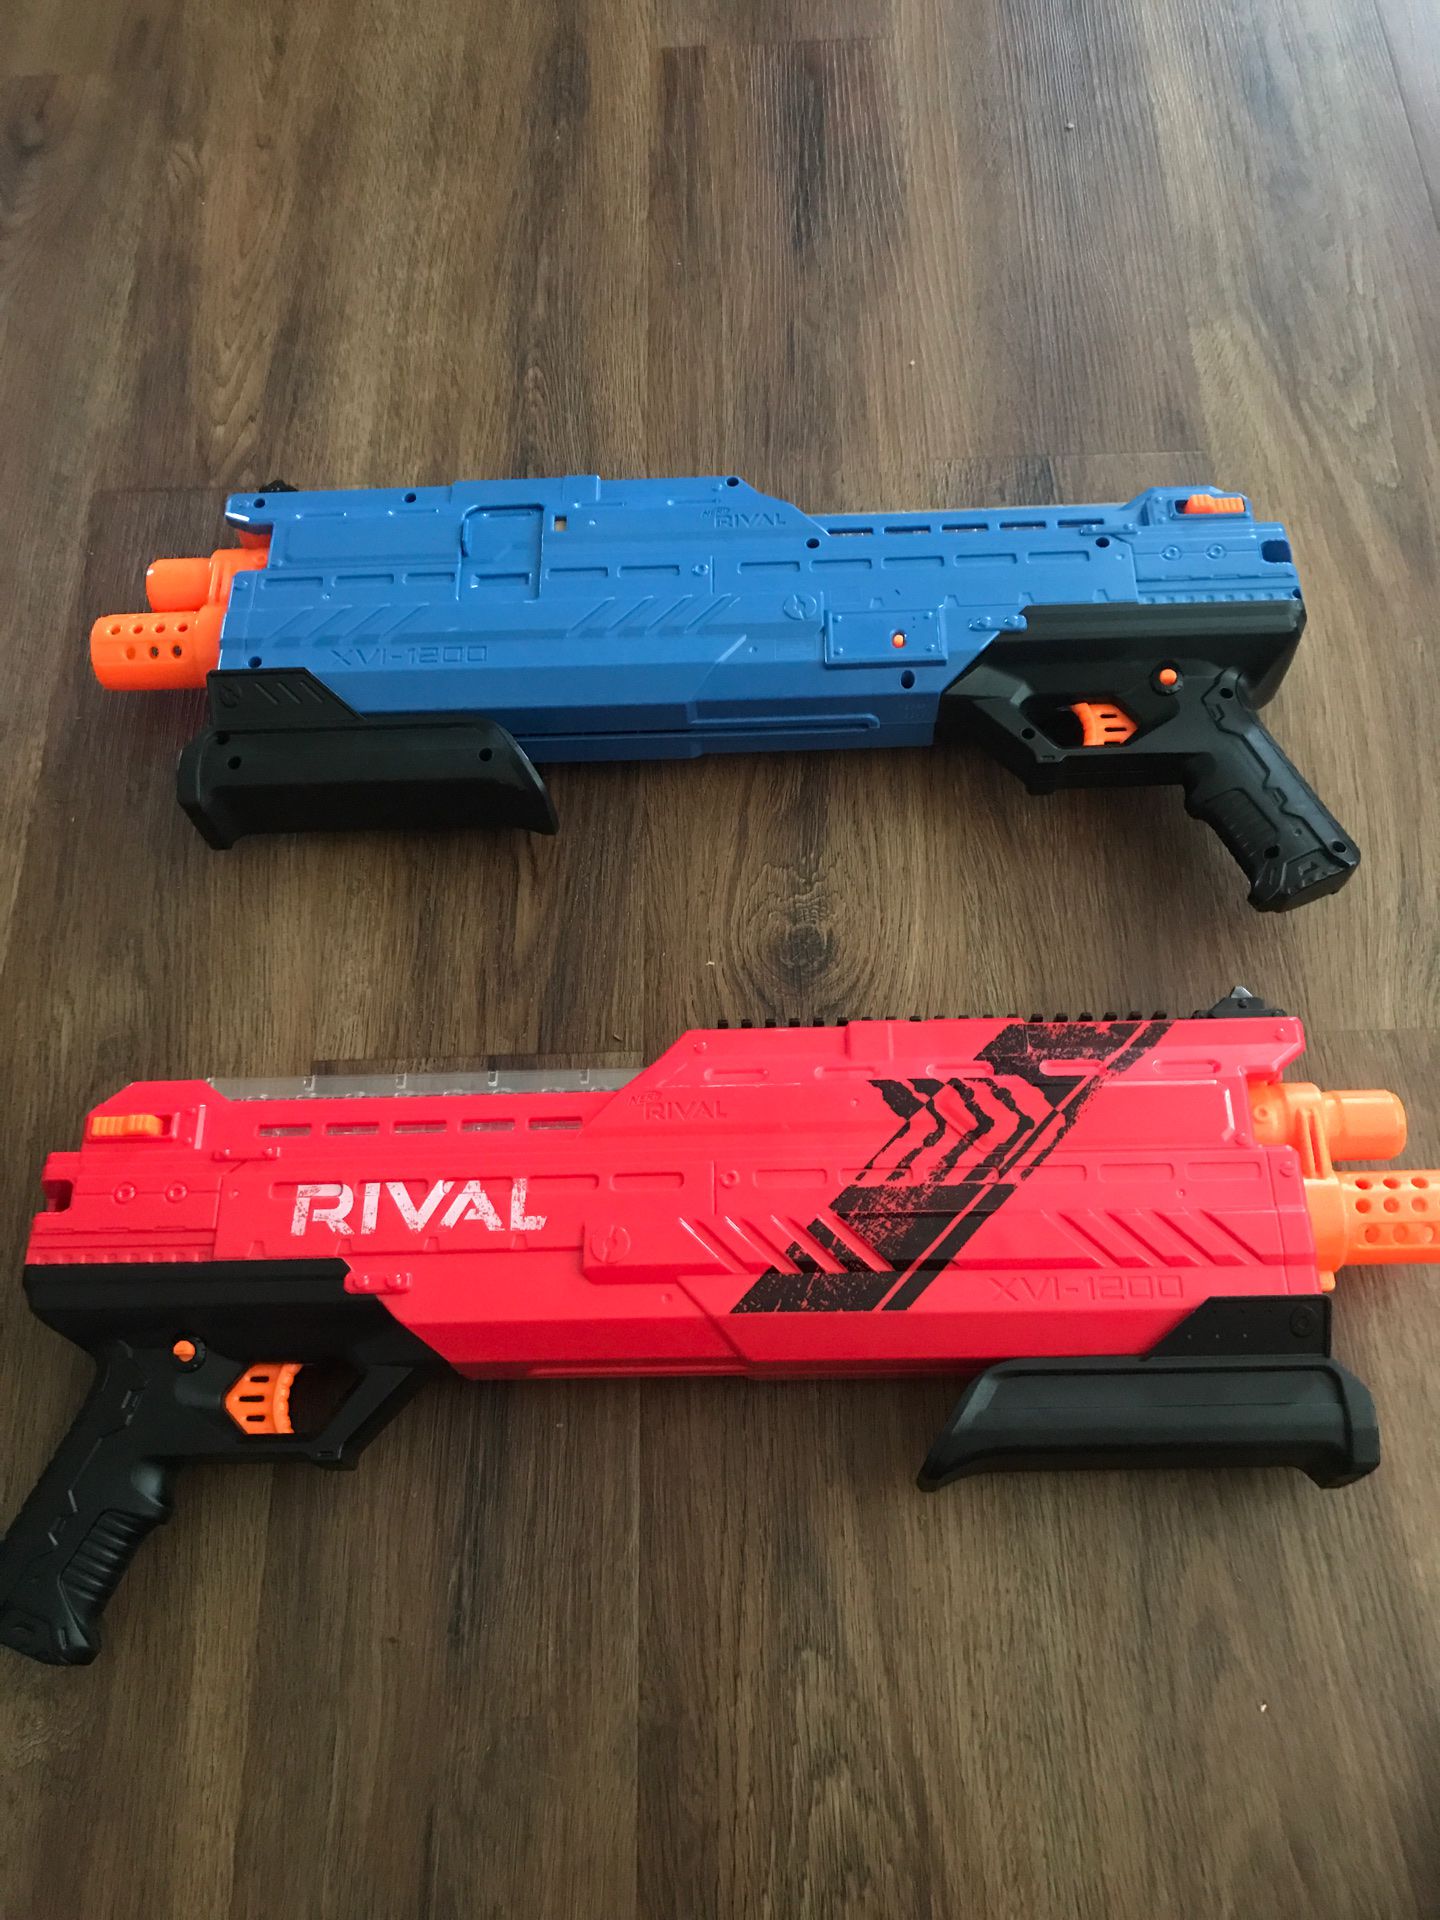 Nerf rival toy guns